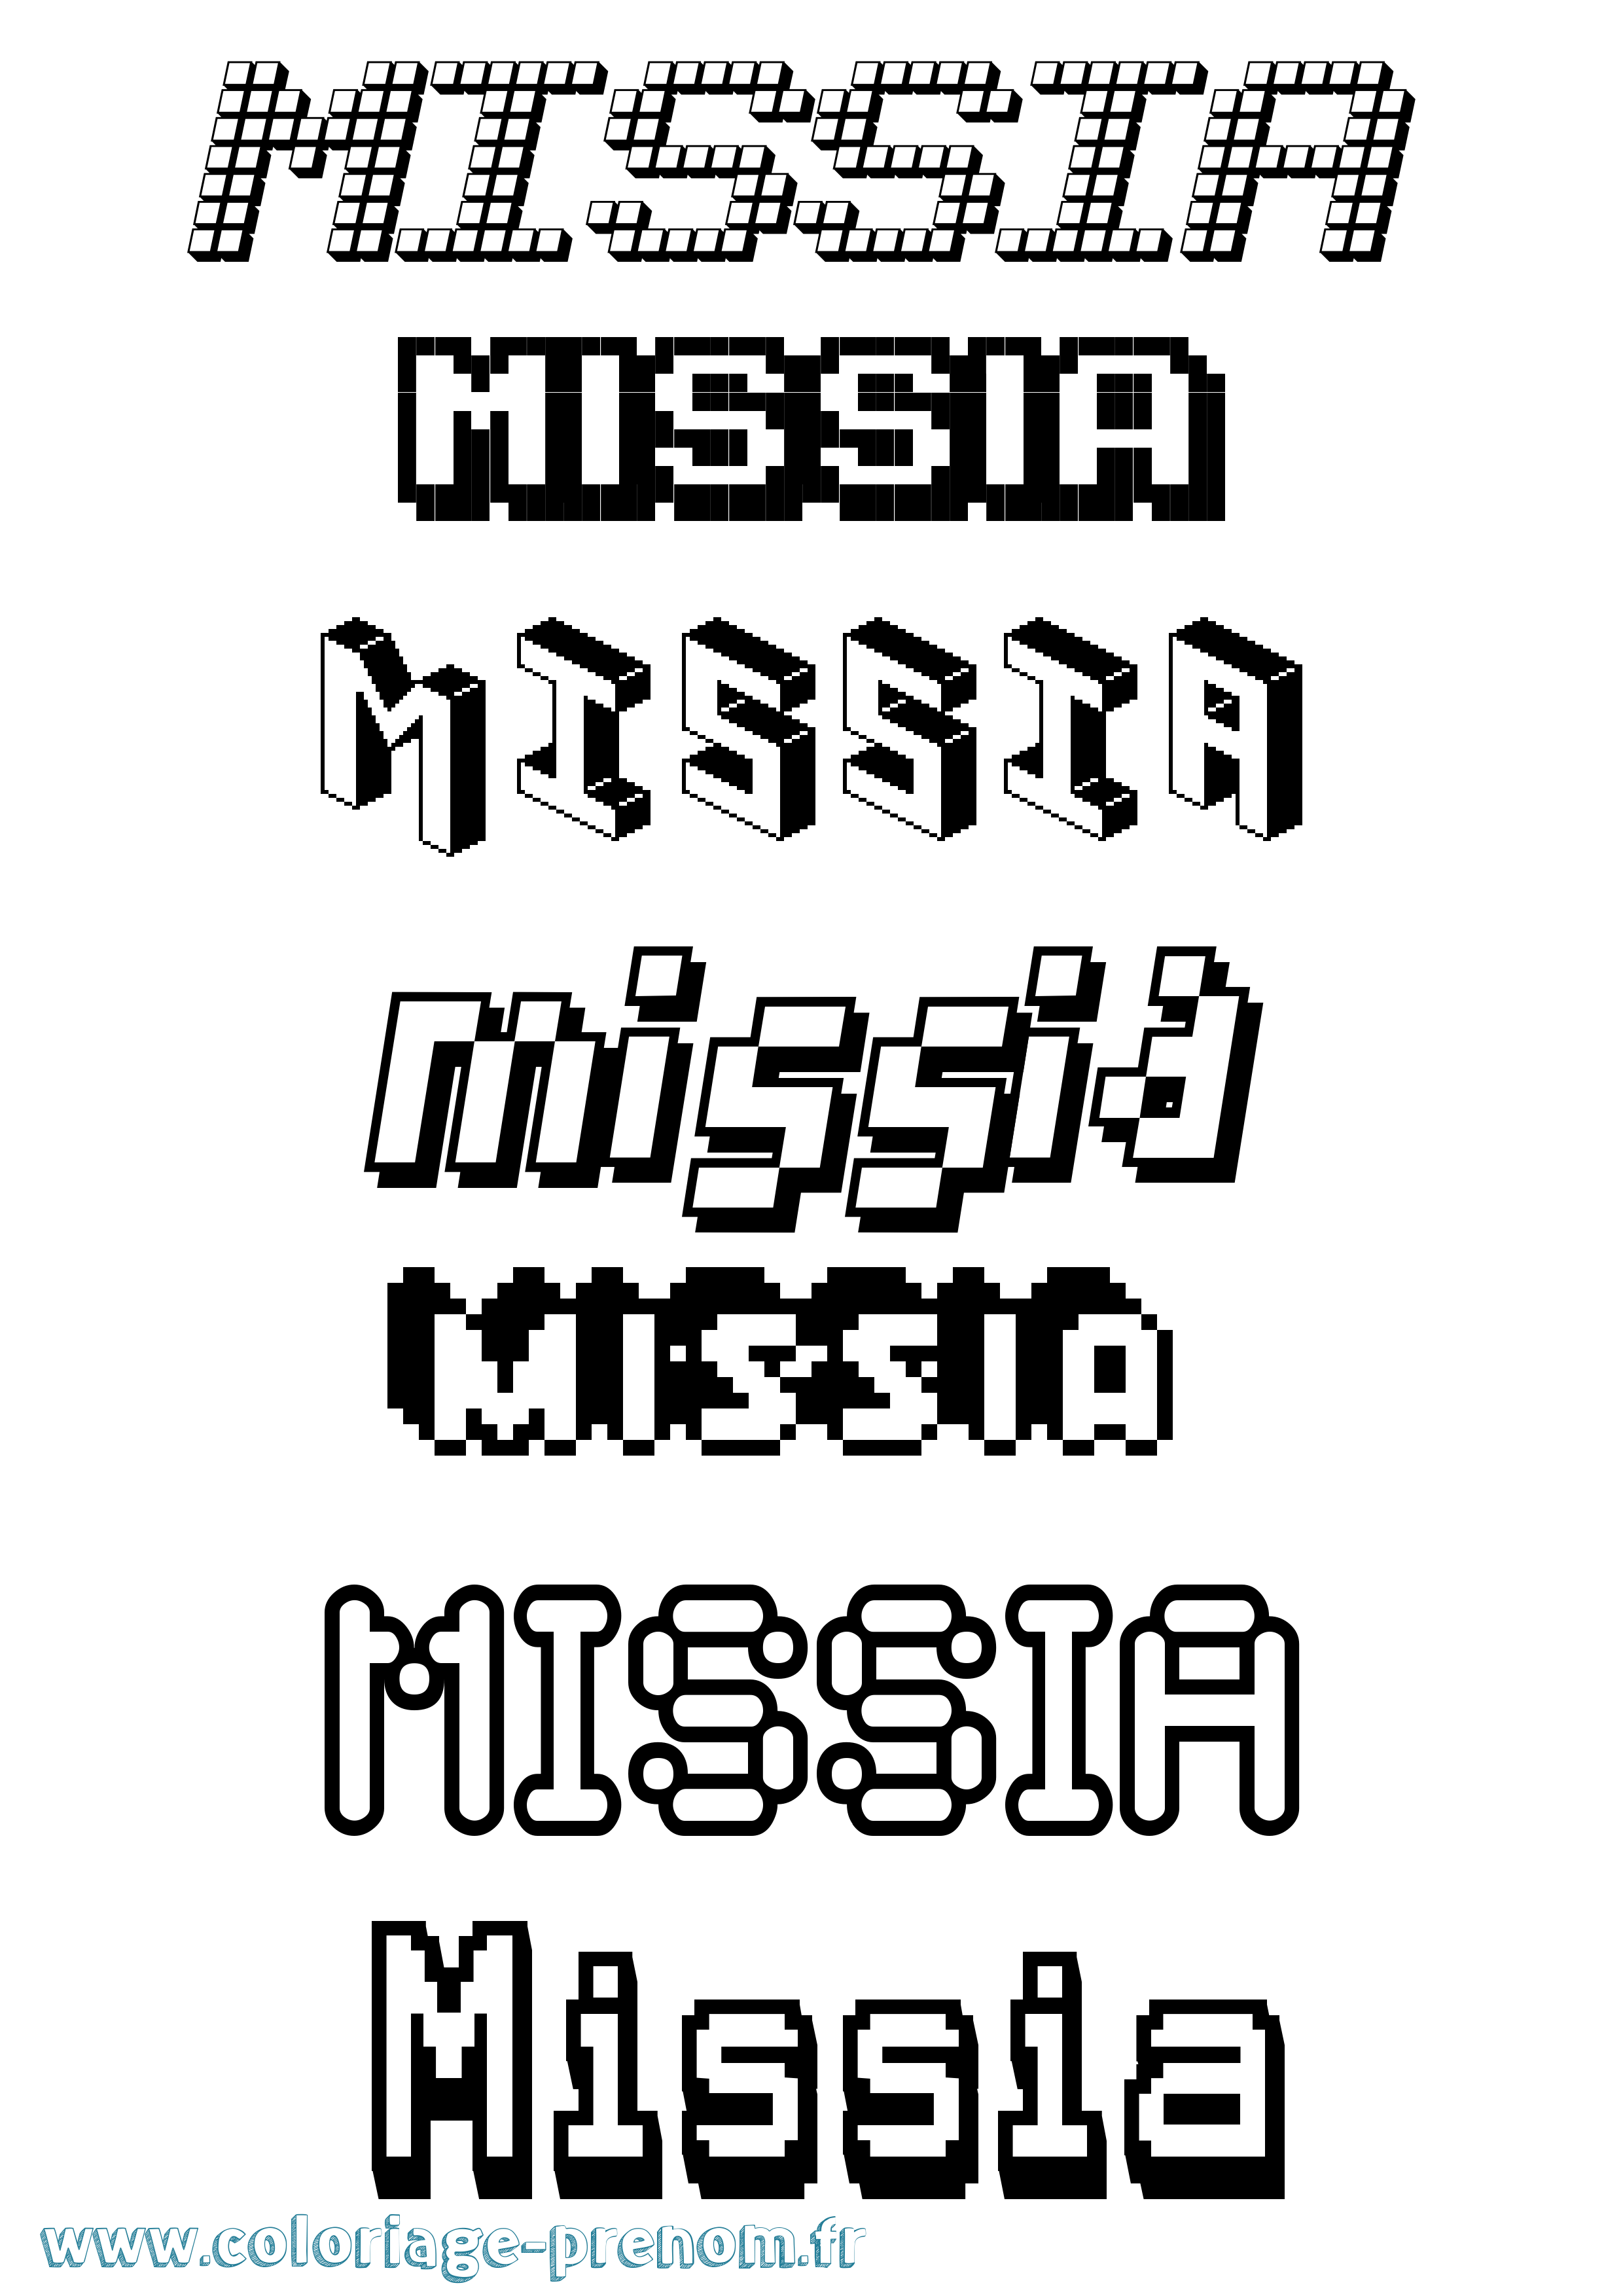 Coloriage prénom Missia Pixel